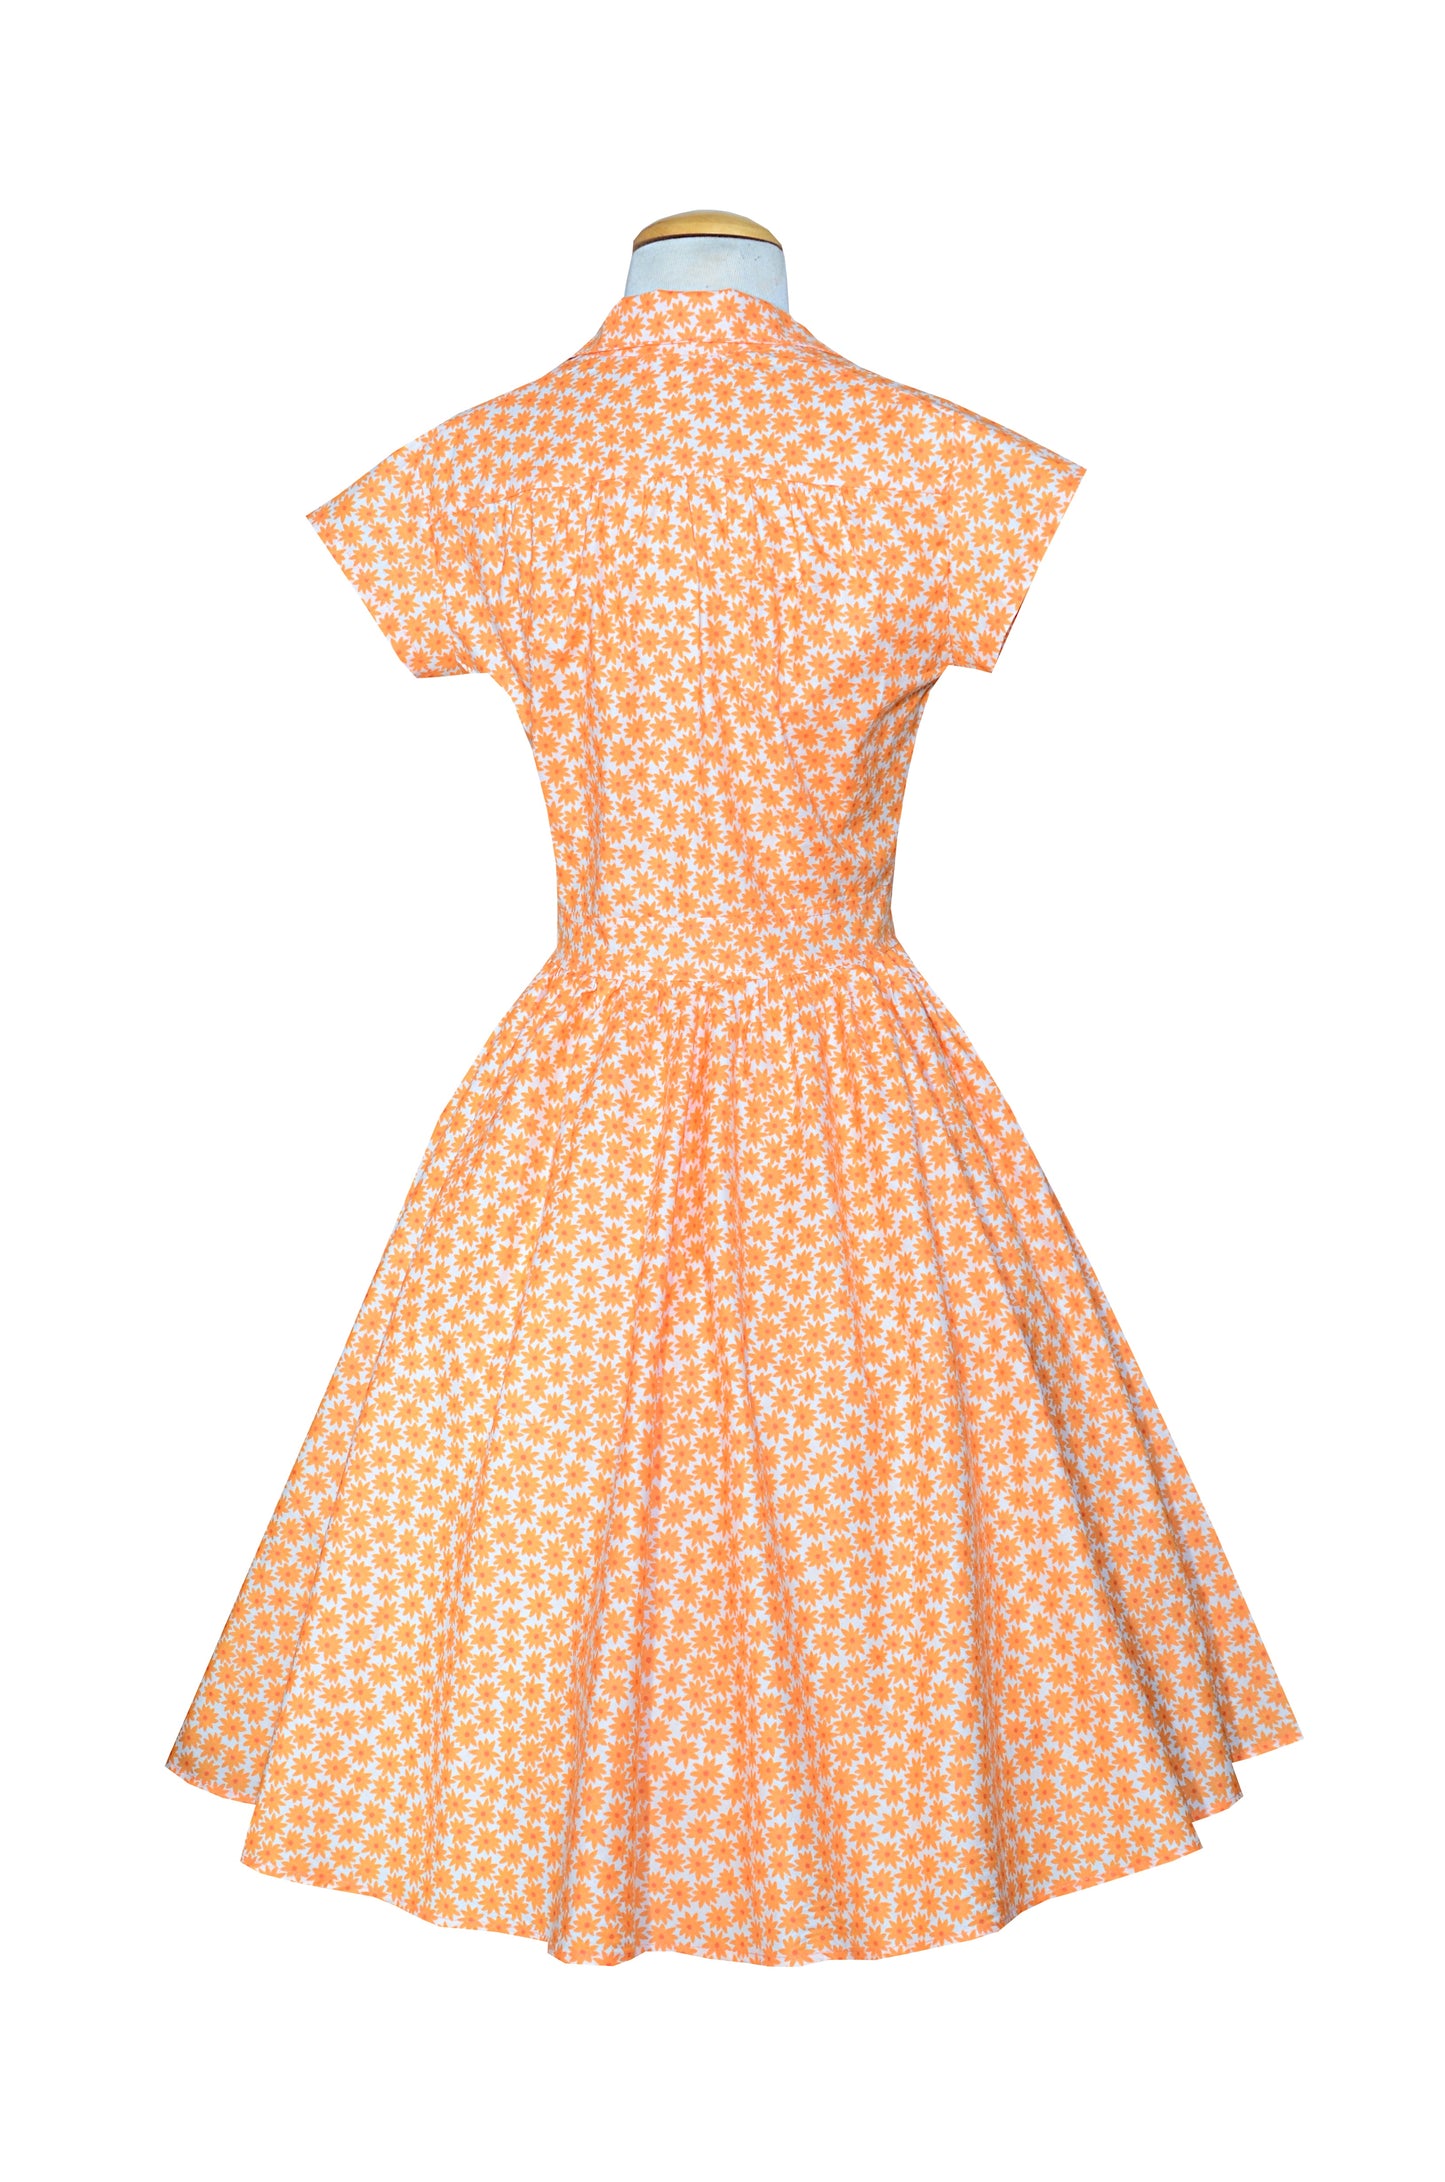 Joni Dress in Tangerine Dream Ditsy Floral